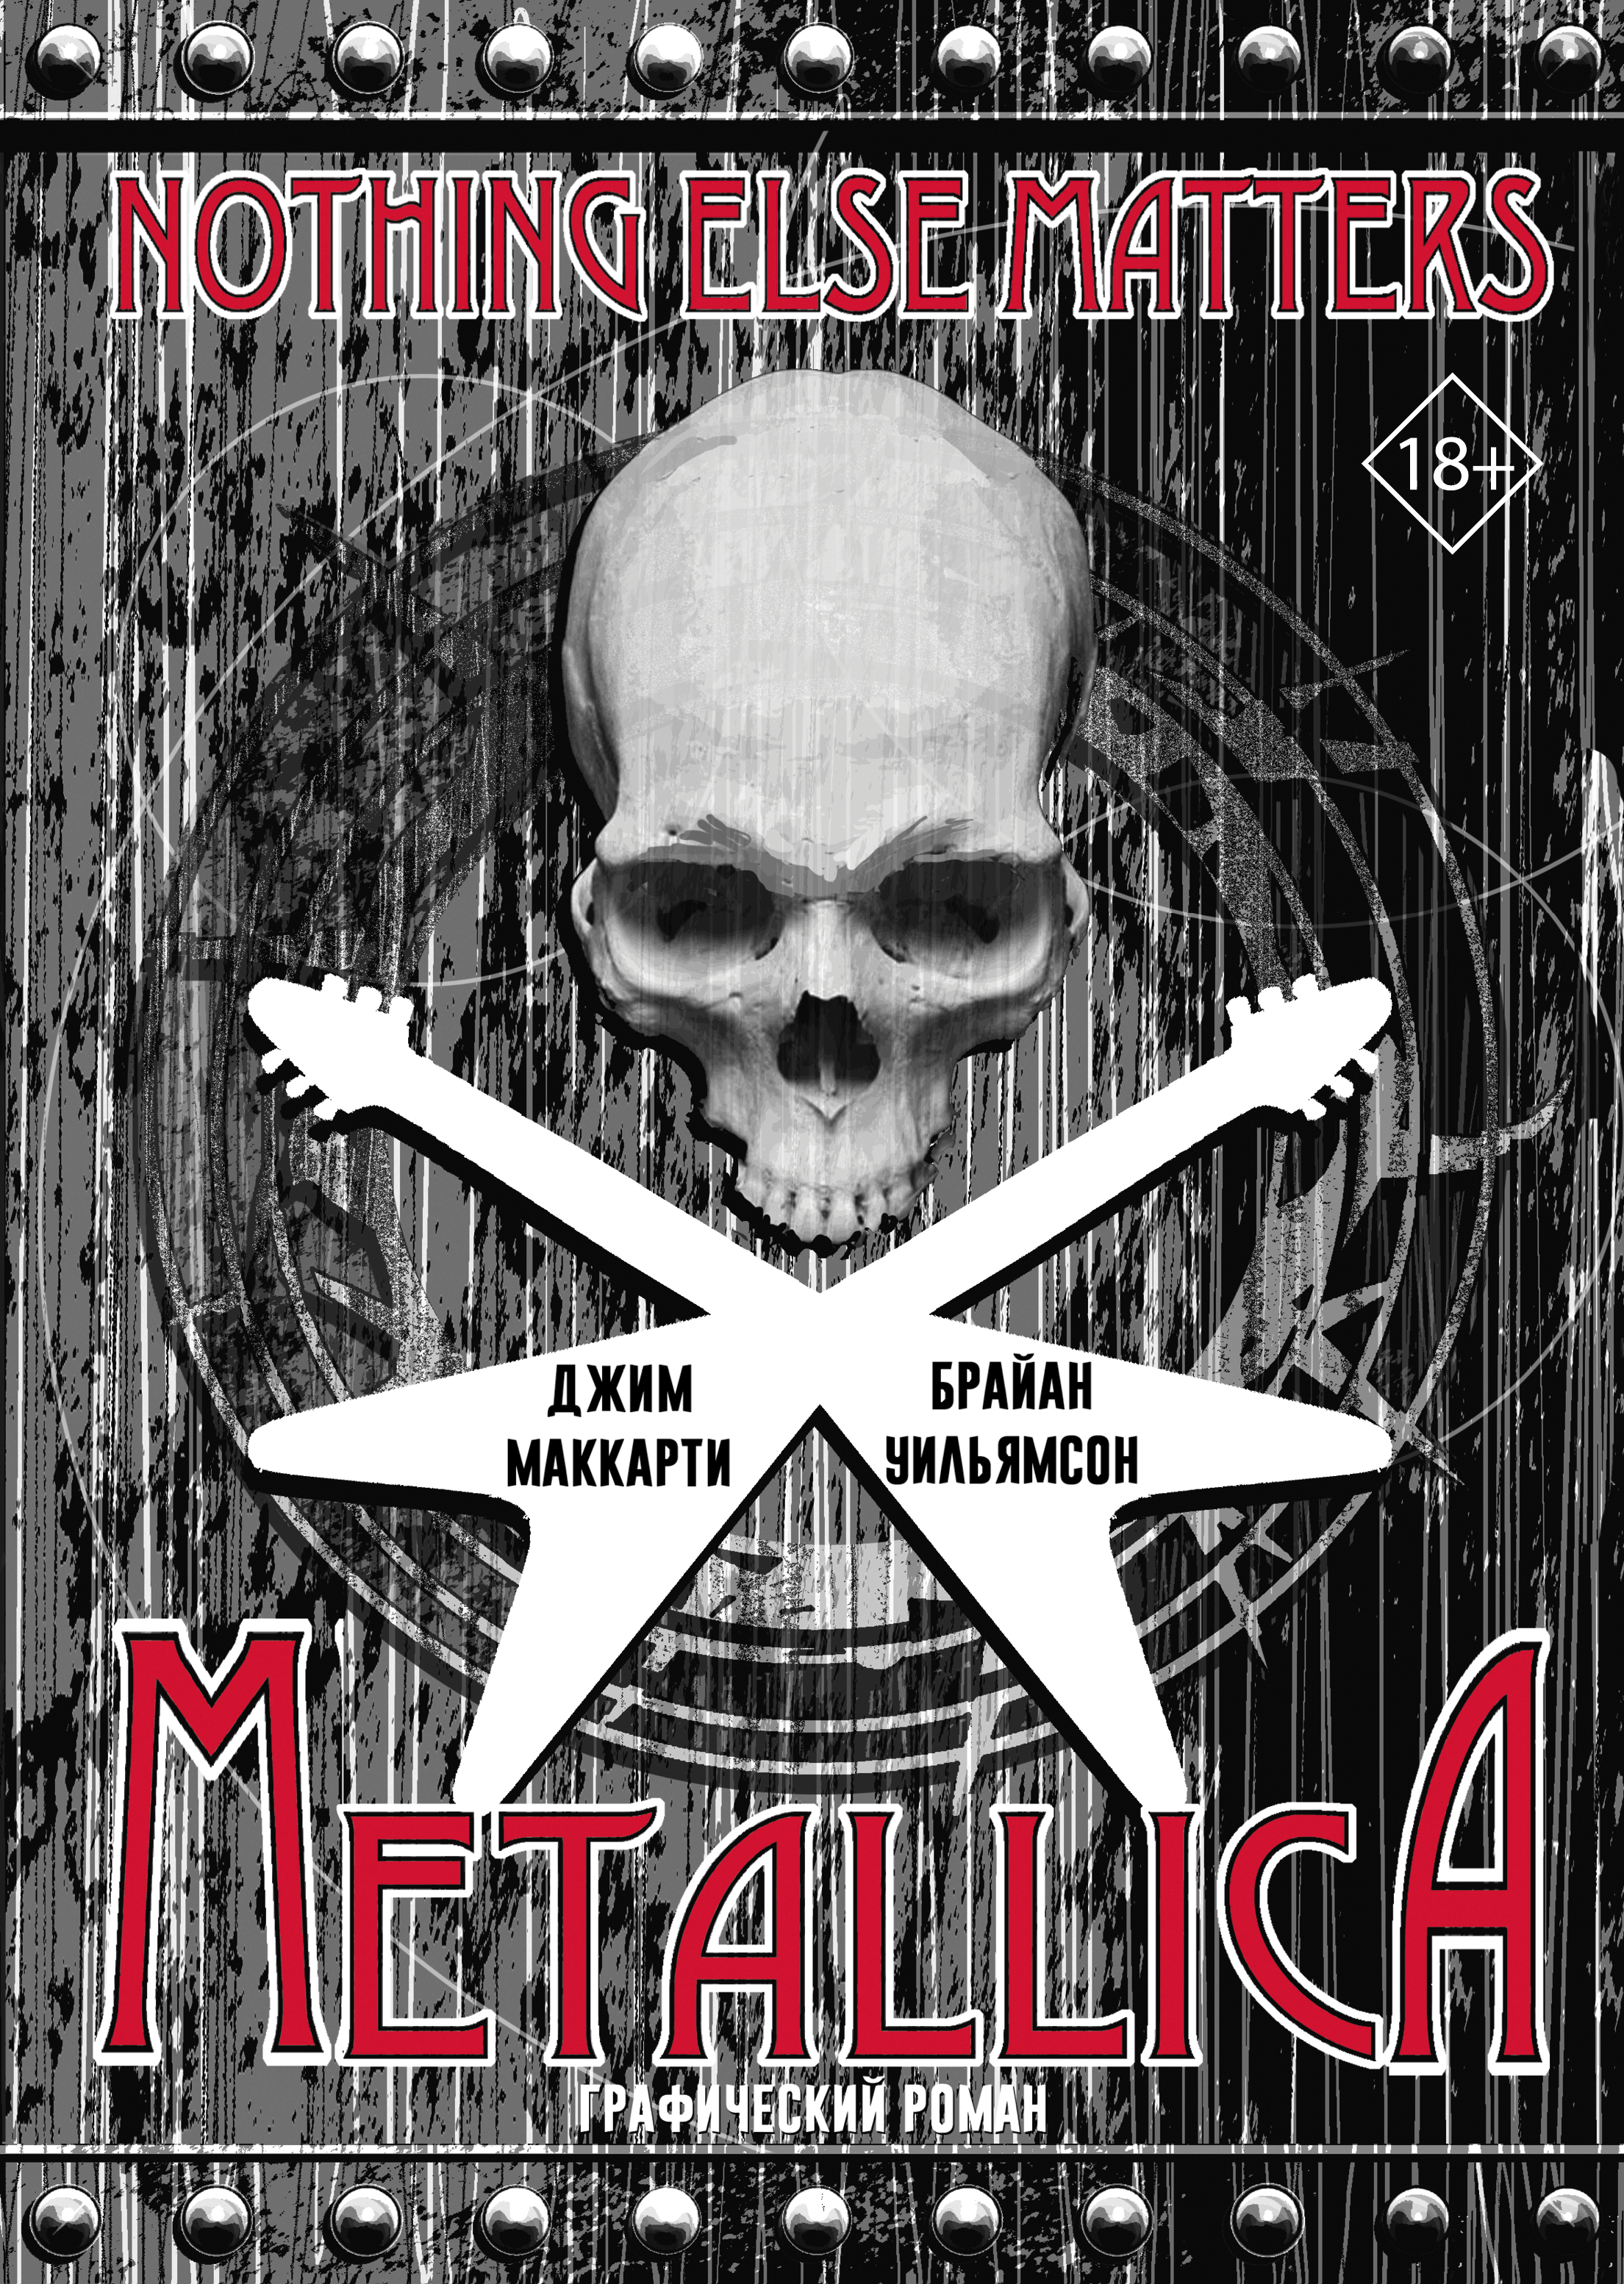 Metallica: Nothing else matters.  